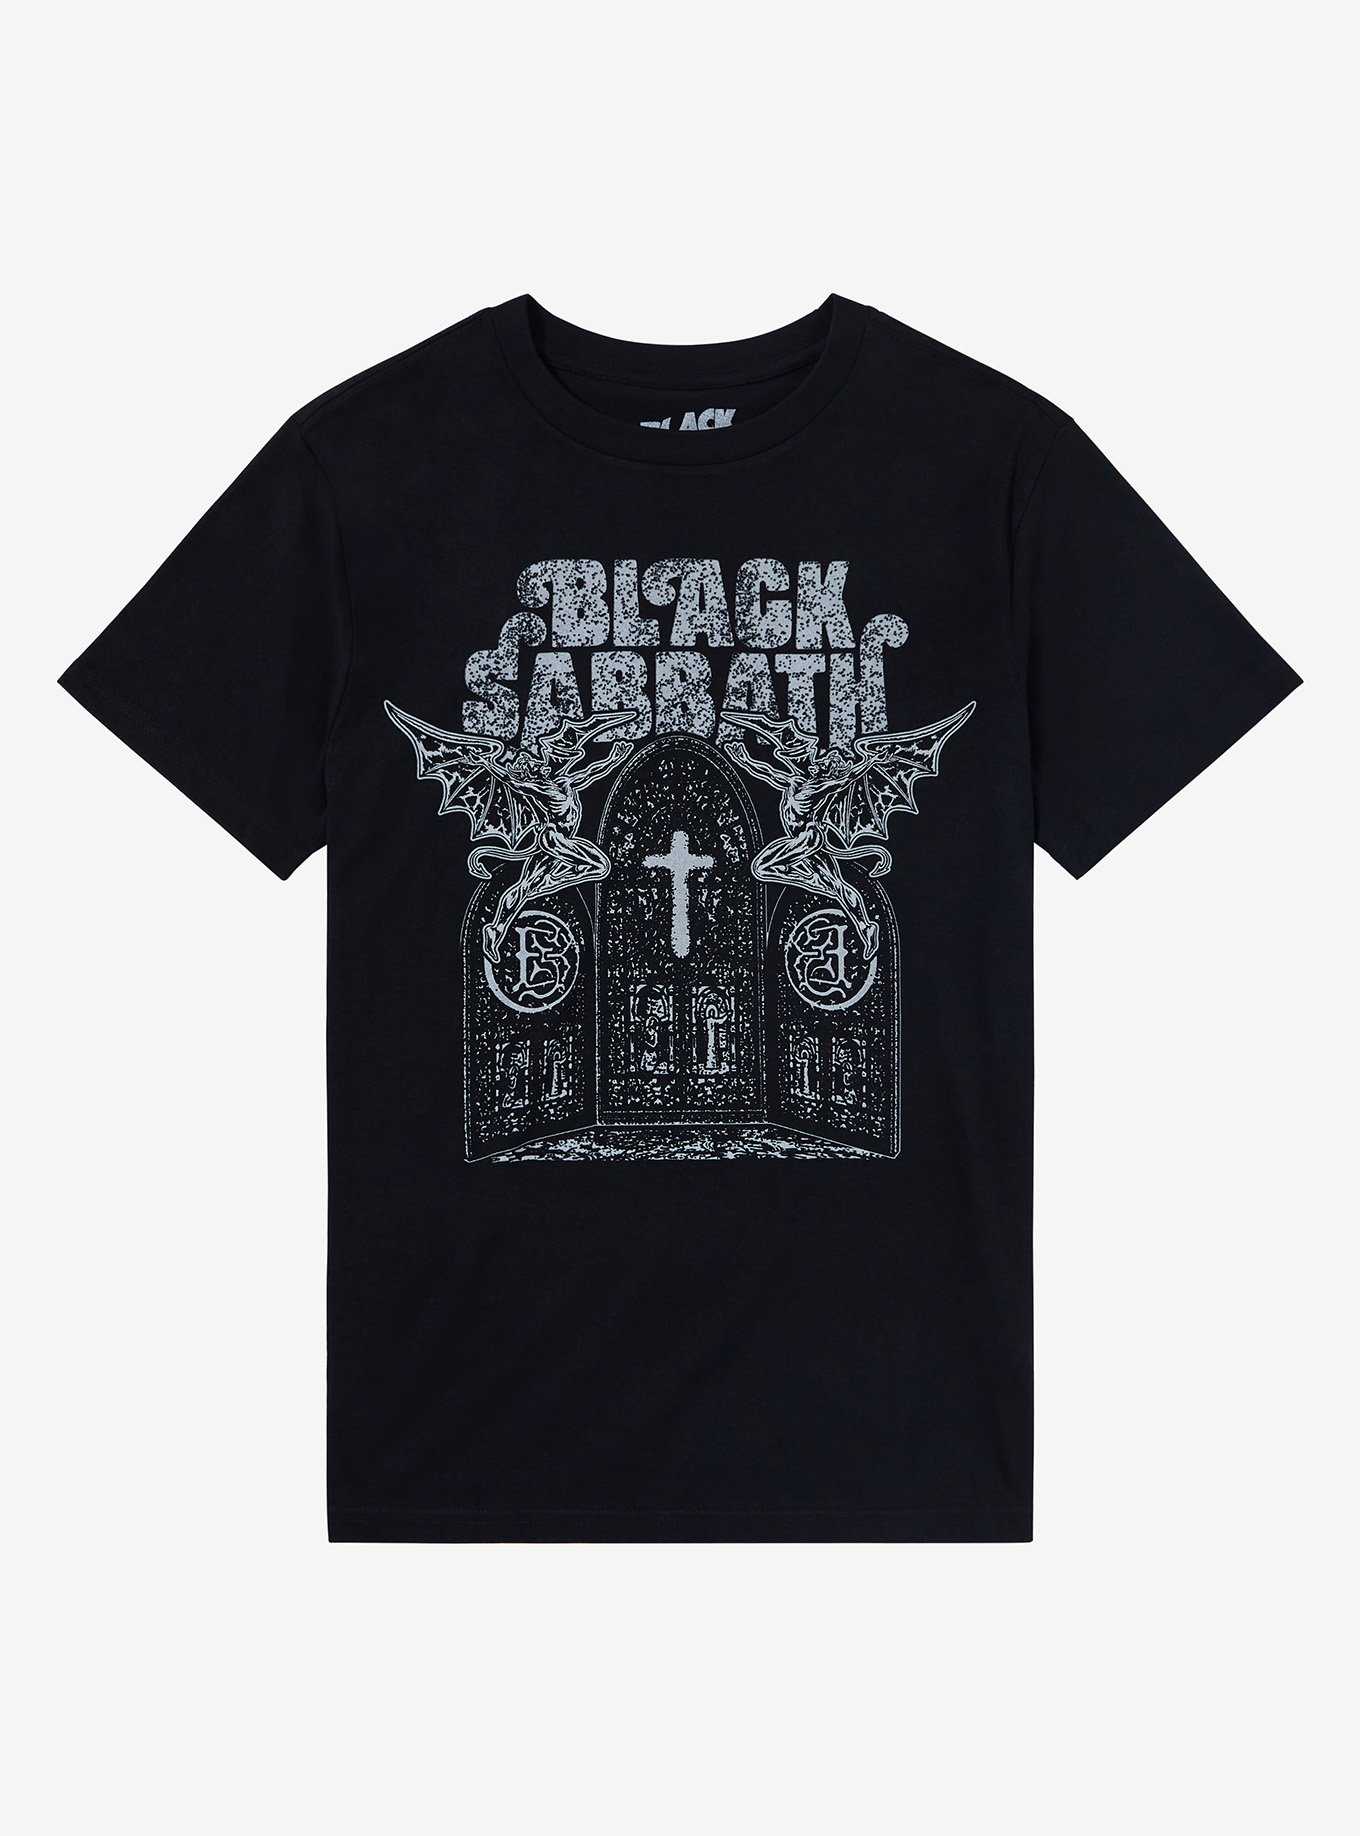 Black Sabbath Cathedral Windows Boyfriend Fit Girls T-Shirt, , hi-res